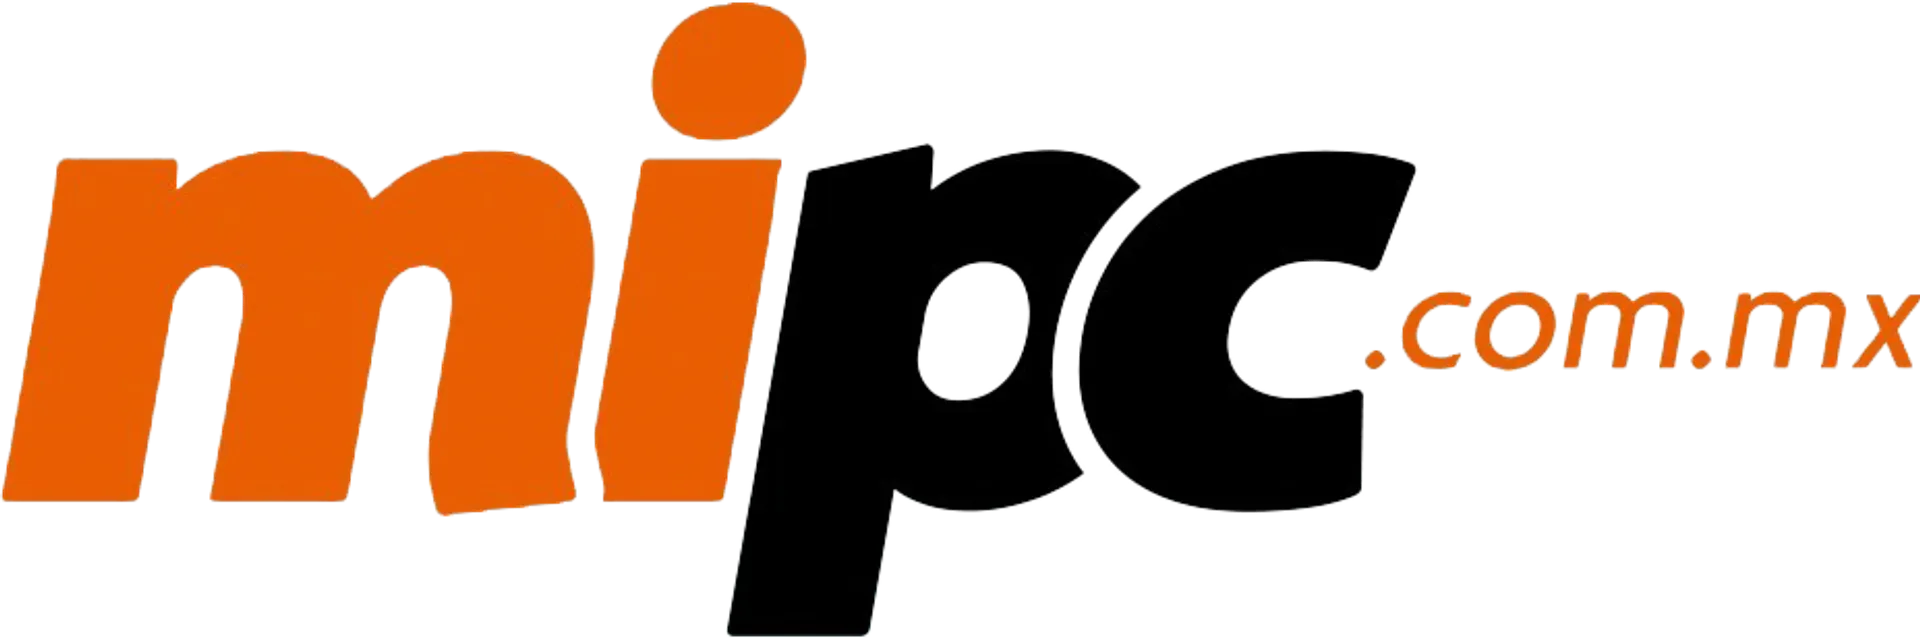 MI PC logo